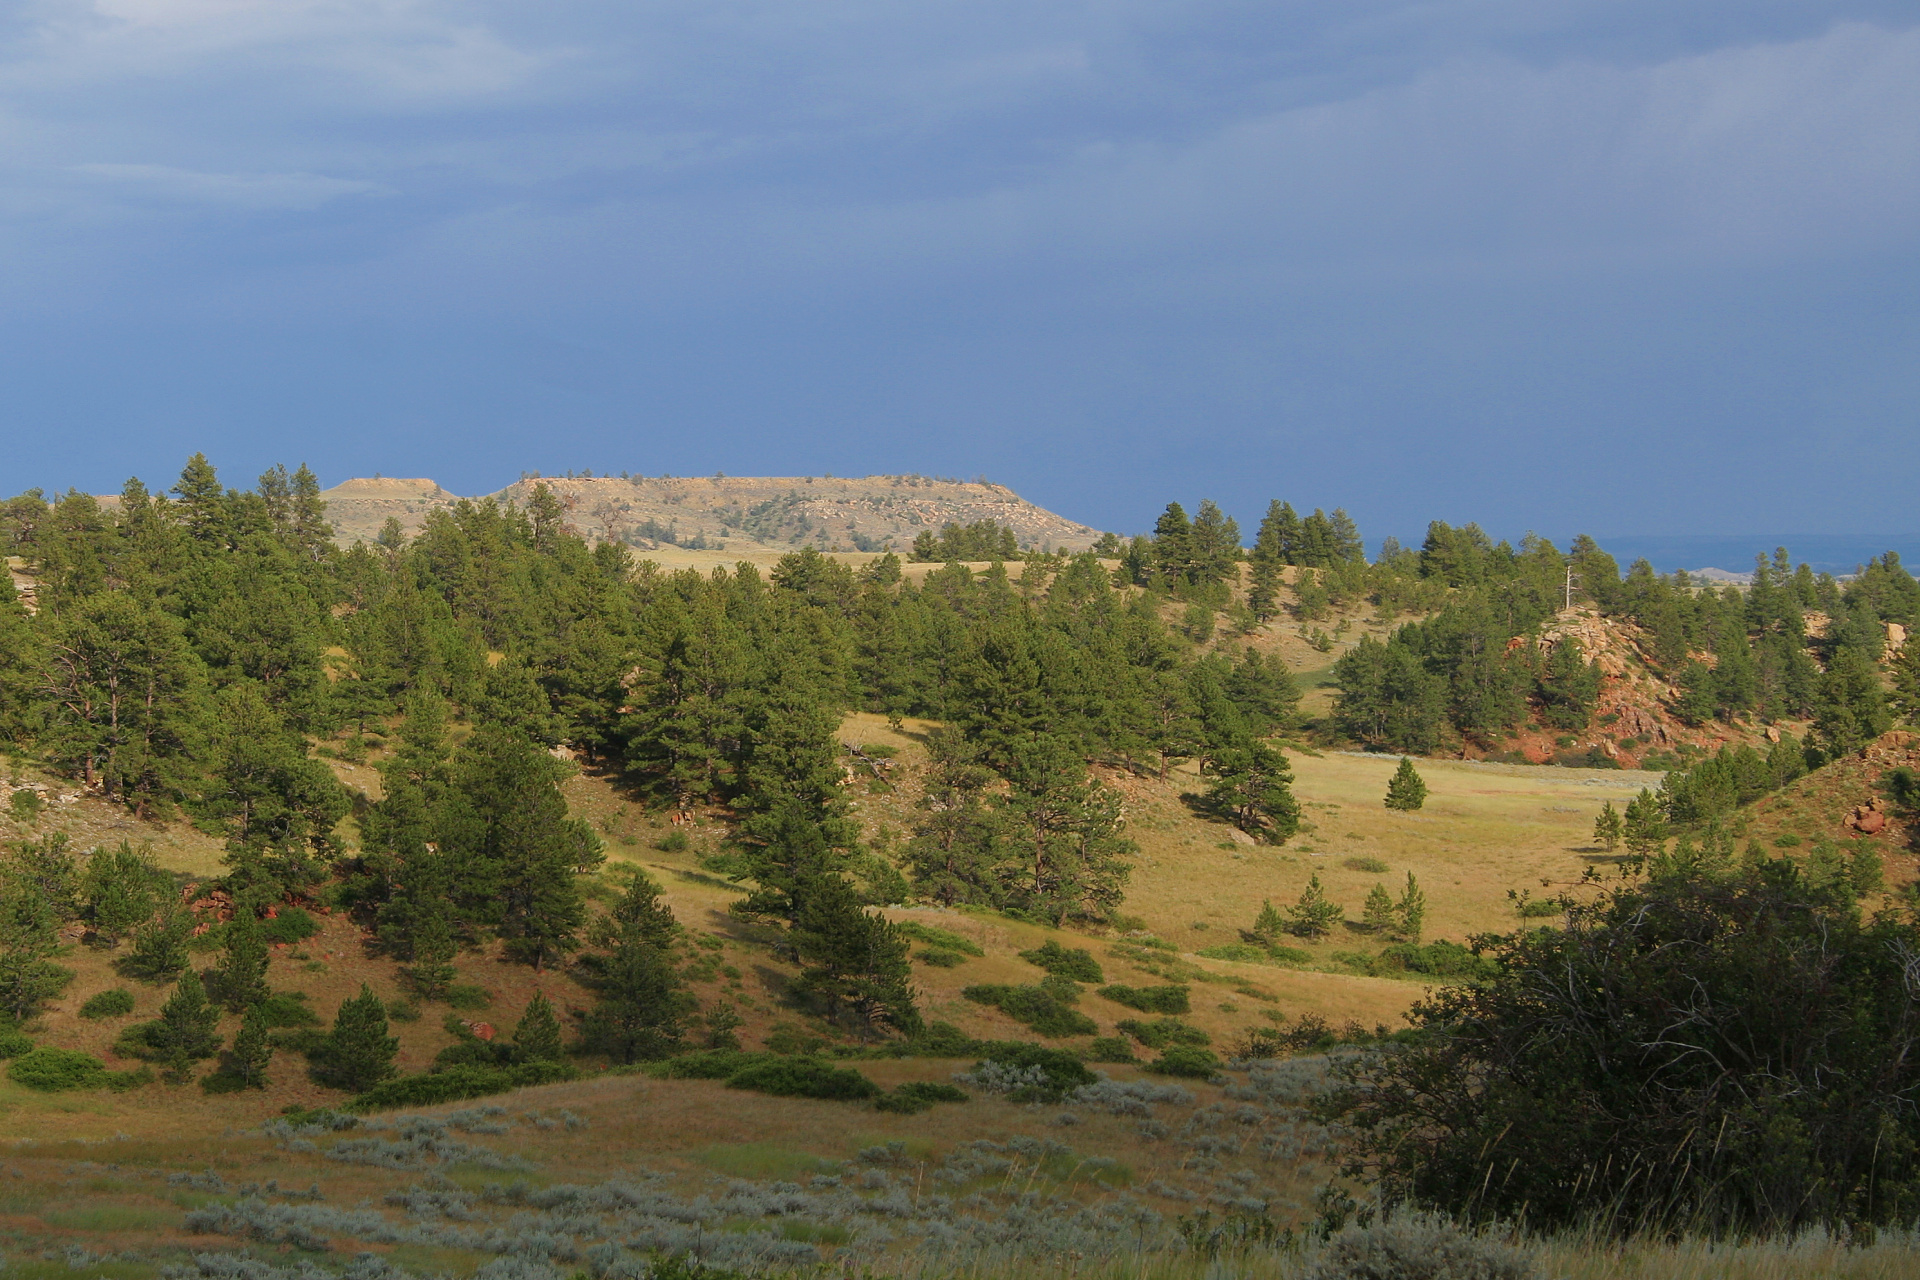 Looking East from the Battlefield (Travels » US Trip 1: Cheyenne Country » The Rez » Rosebud Battlefield)